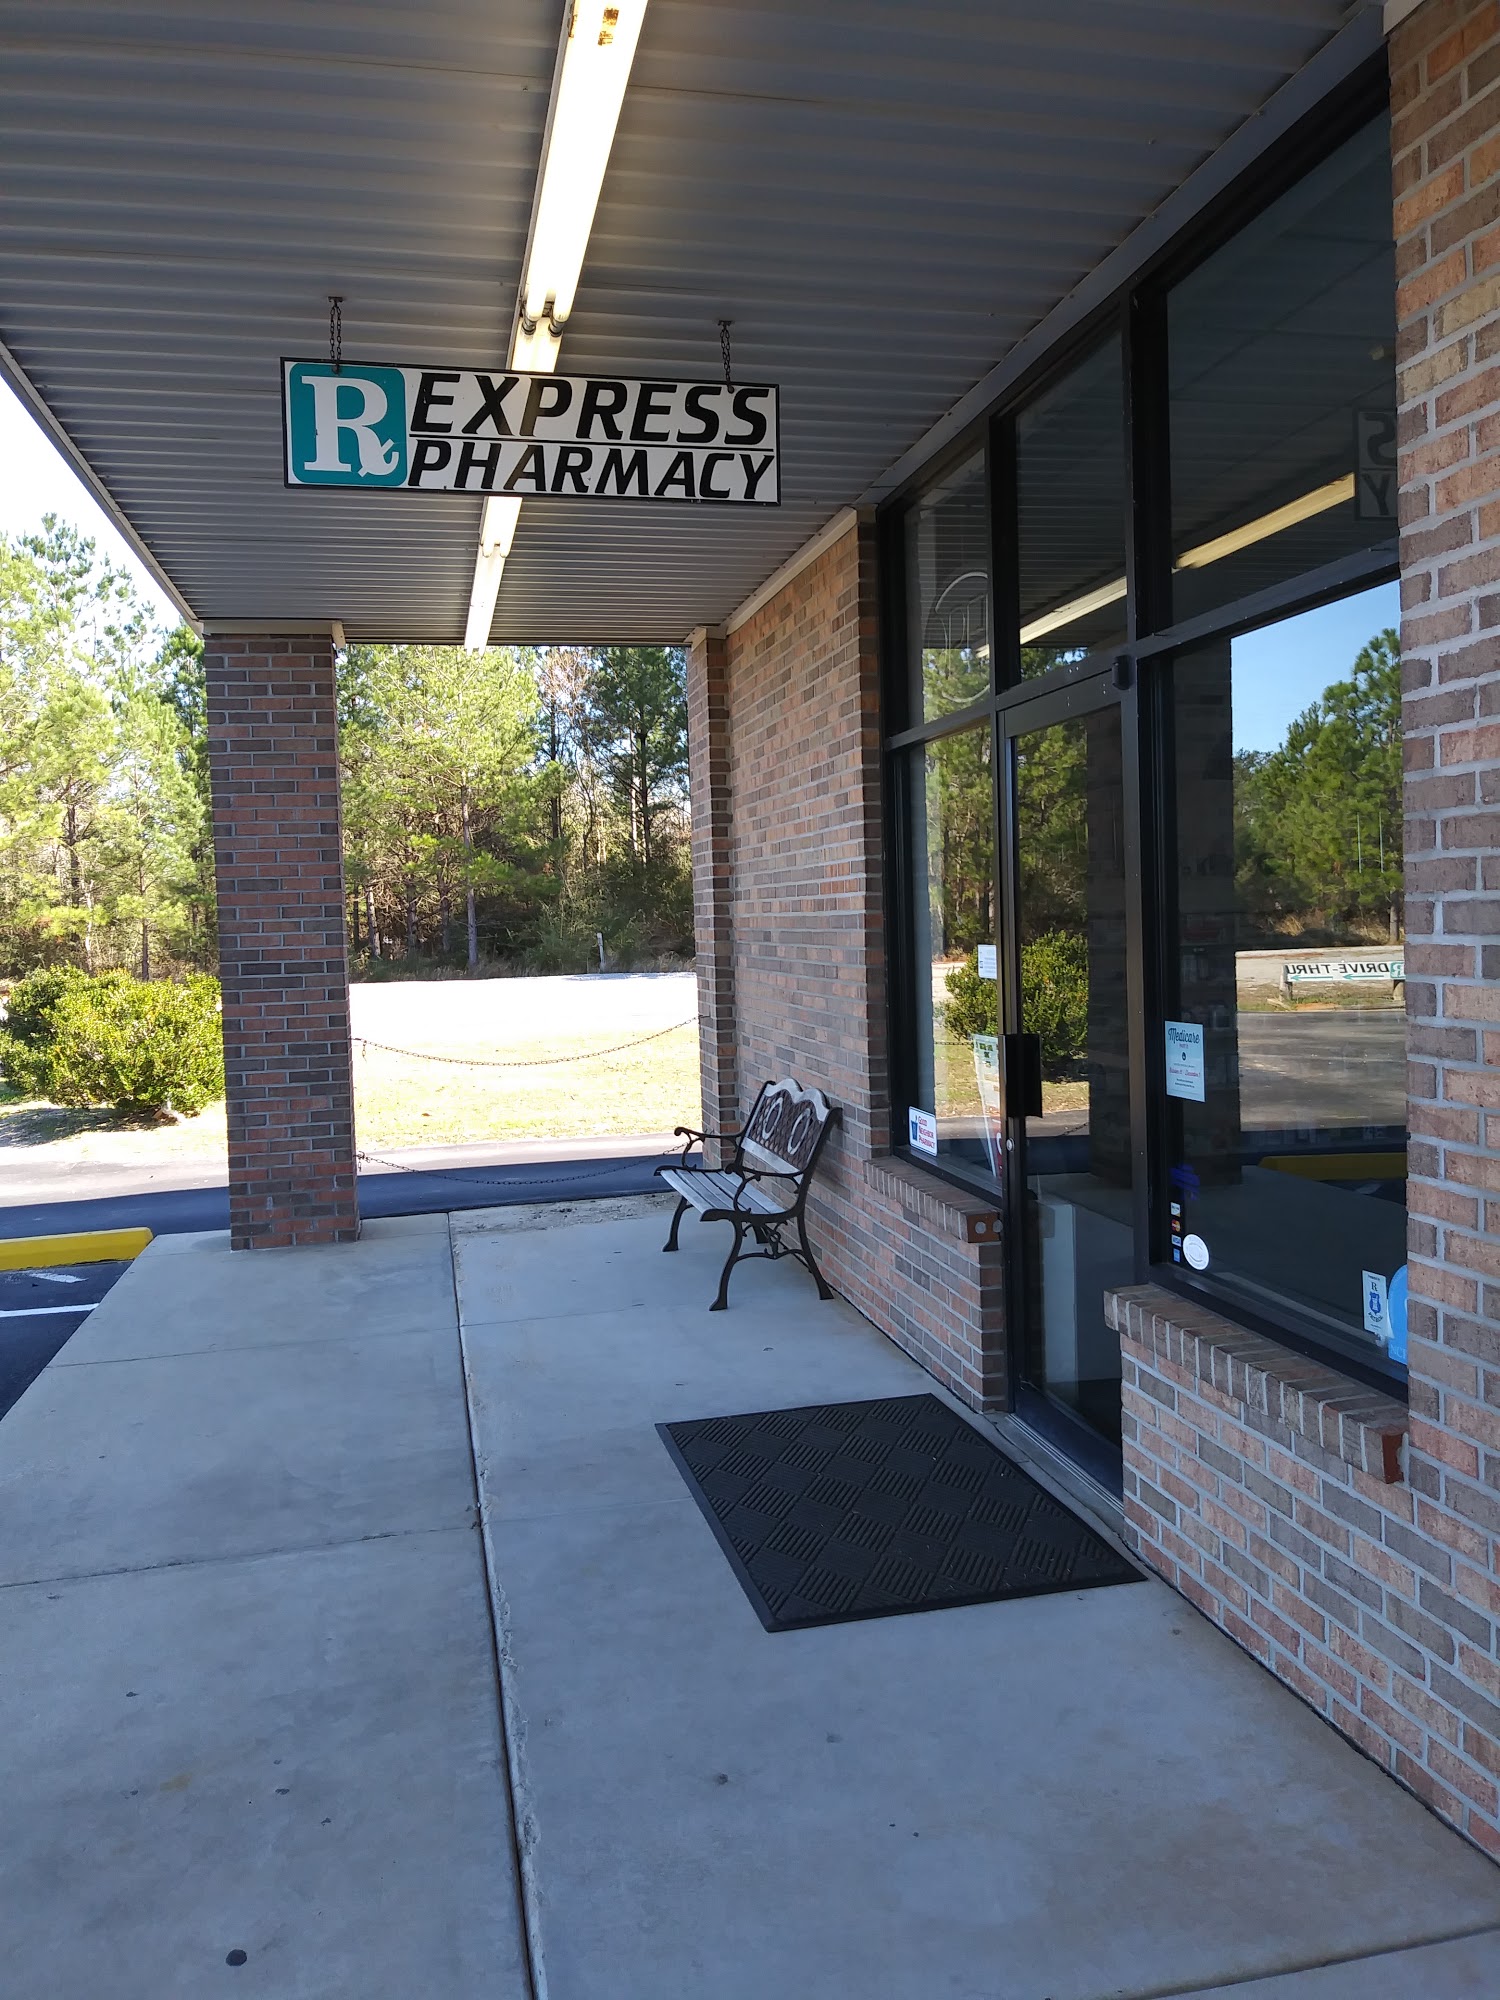 Rx Express Pharmacy